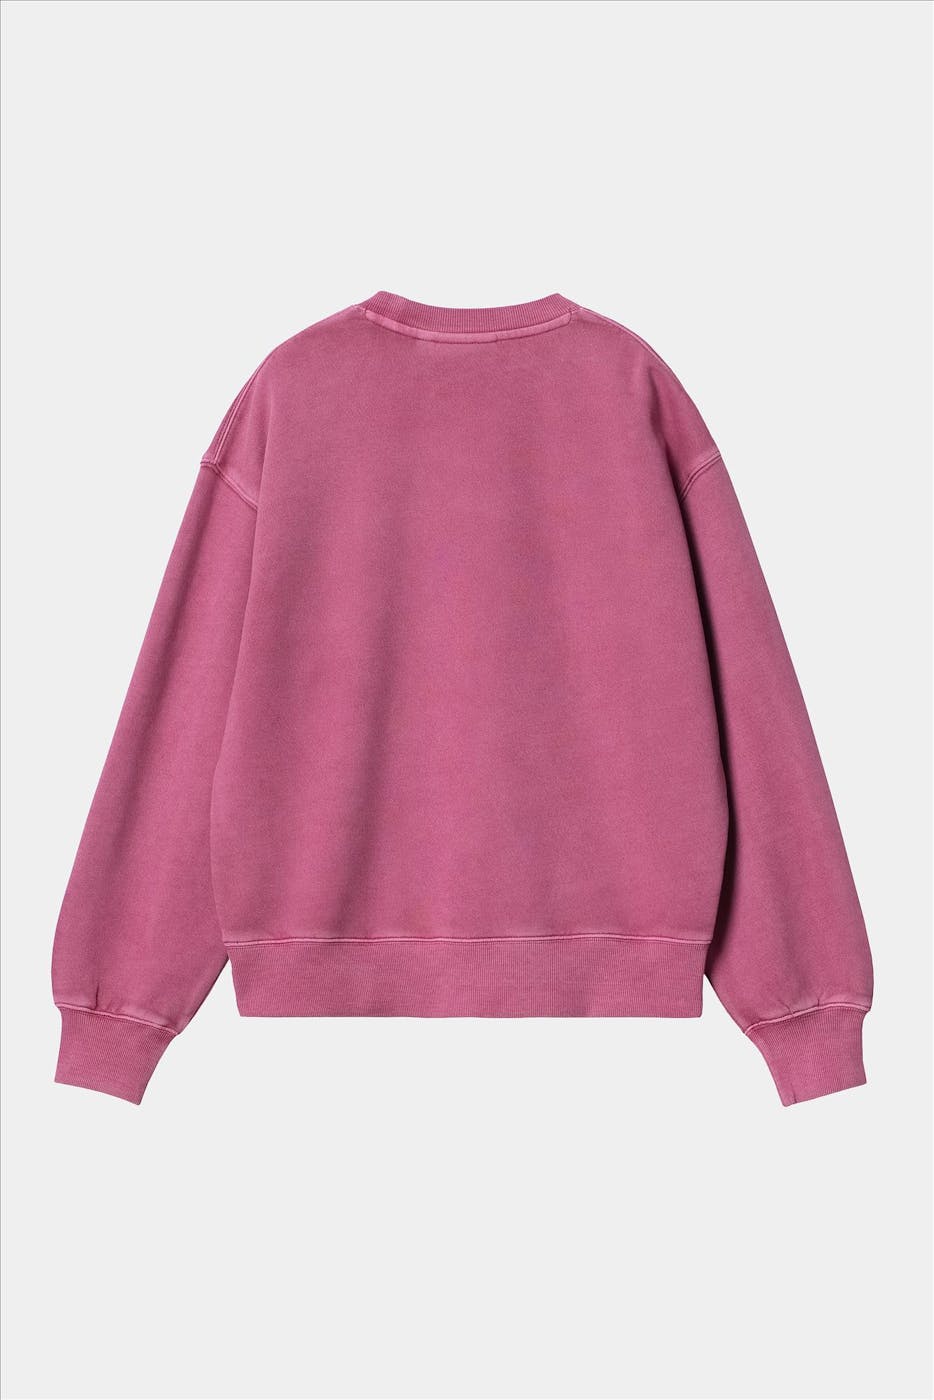 Carhartt WIP - Fushia Nelson sweater